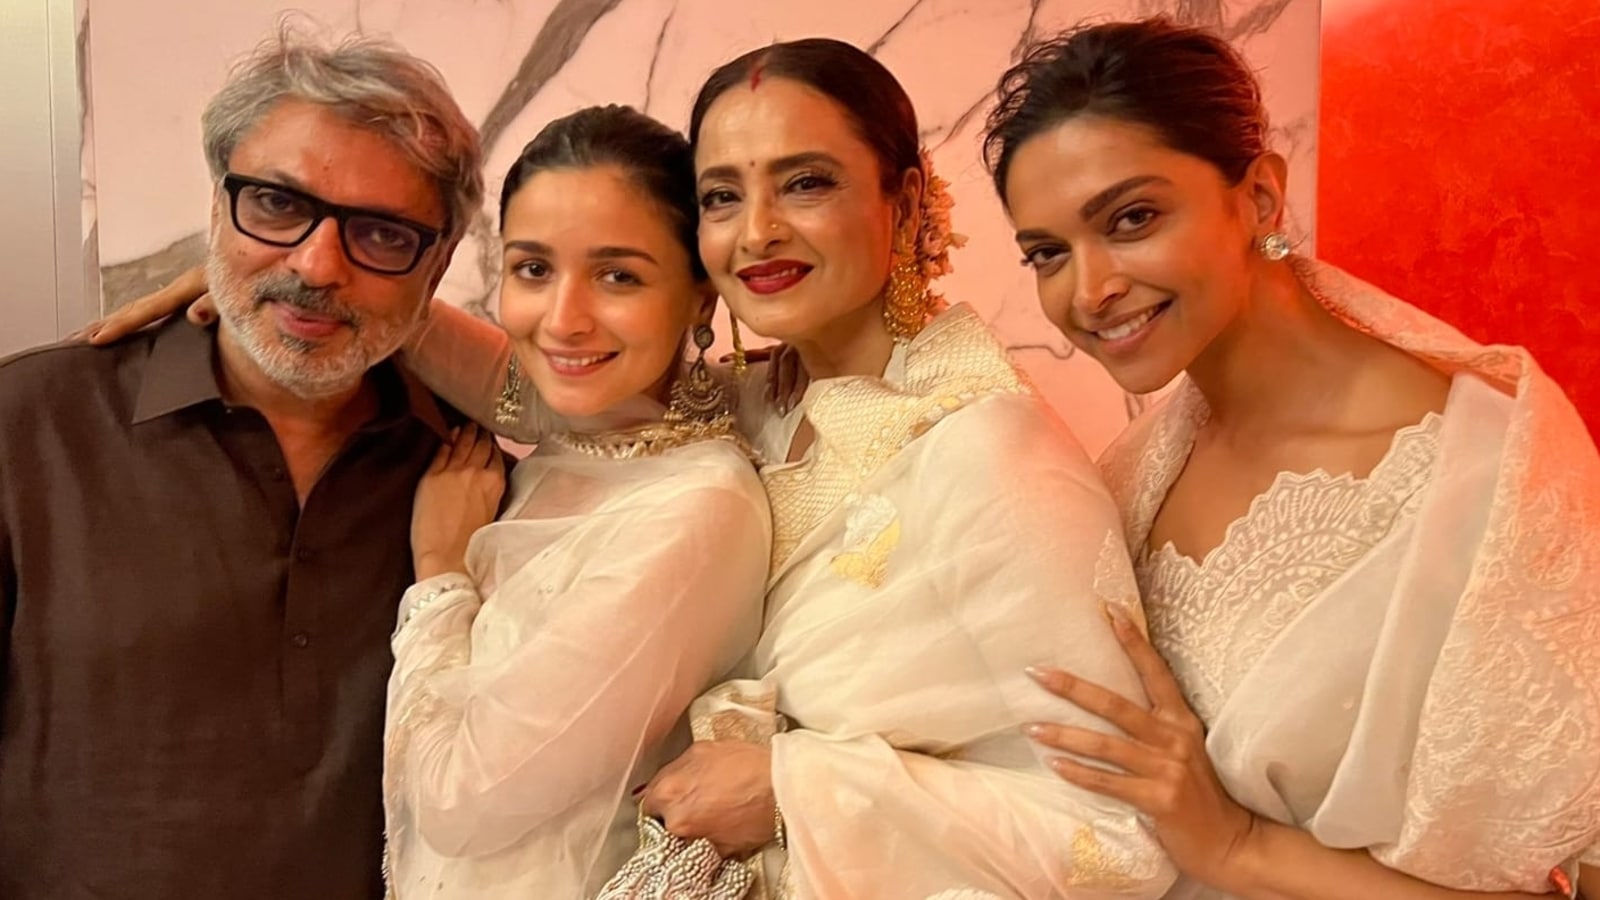 Rekha Ka Bf Video - Alia, Deepika, Rekha pose with Bhansali in unseen pic, fans call it 'dream  cast' | Bollywood - Hindustan Times